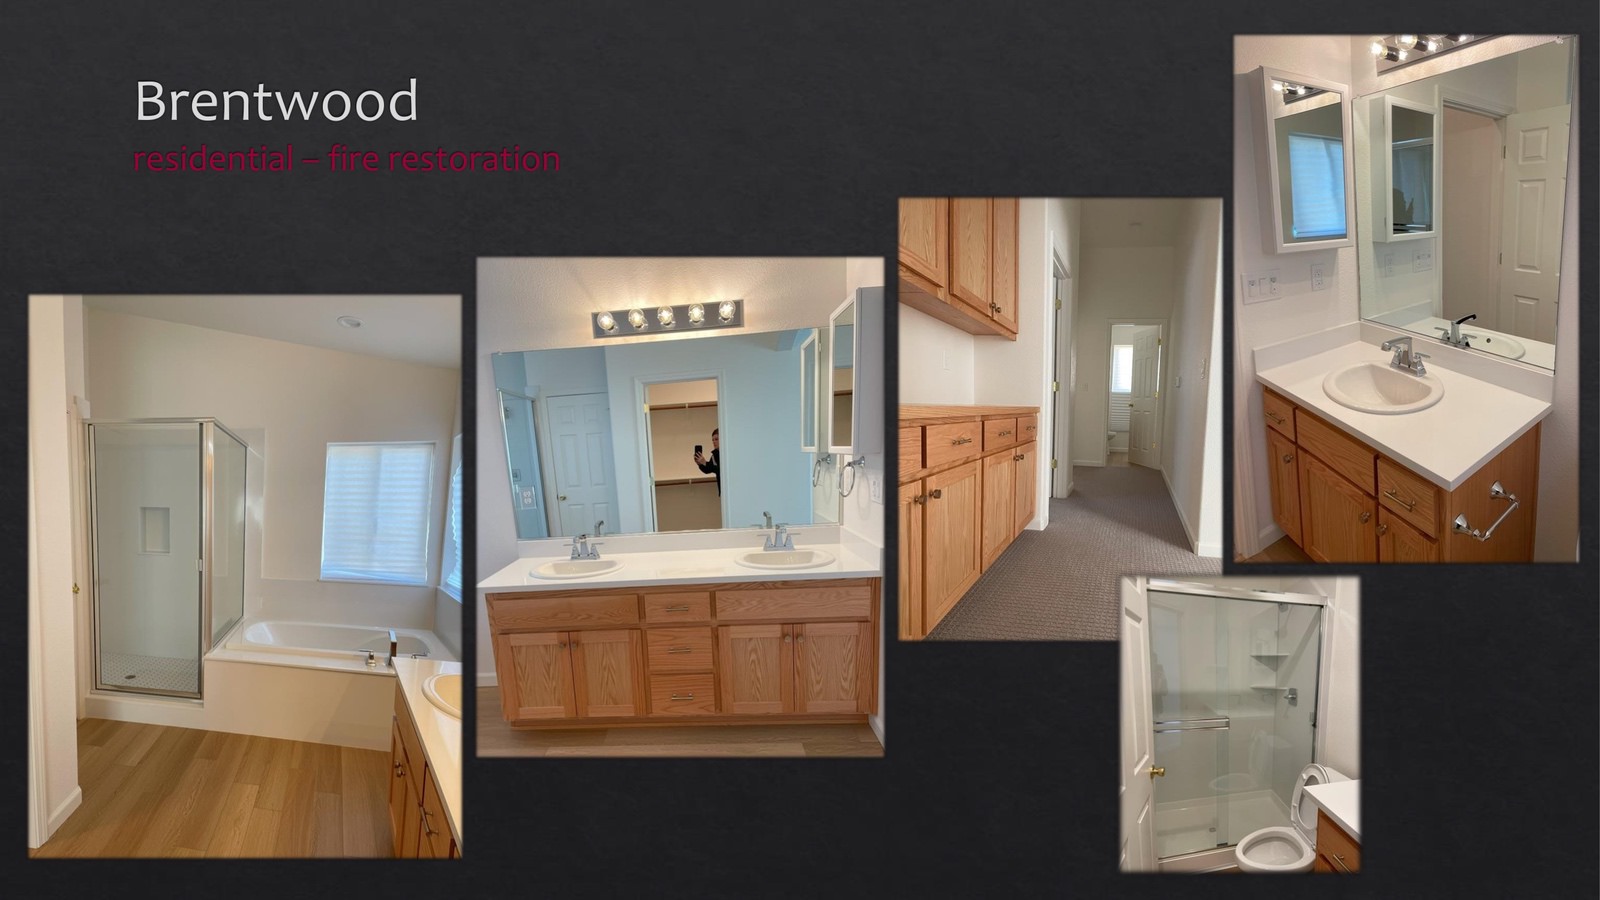 Brentwood Residential fire restoration - bathroom - lightbox